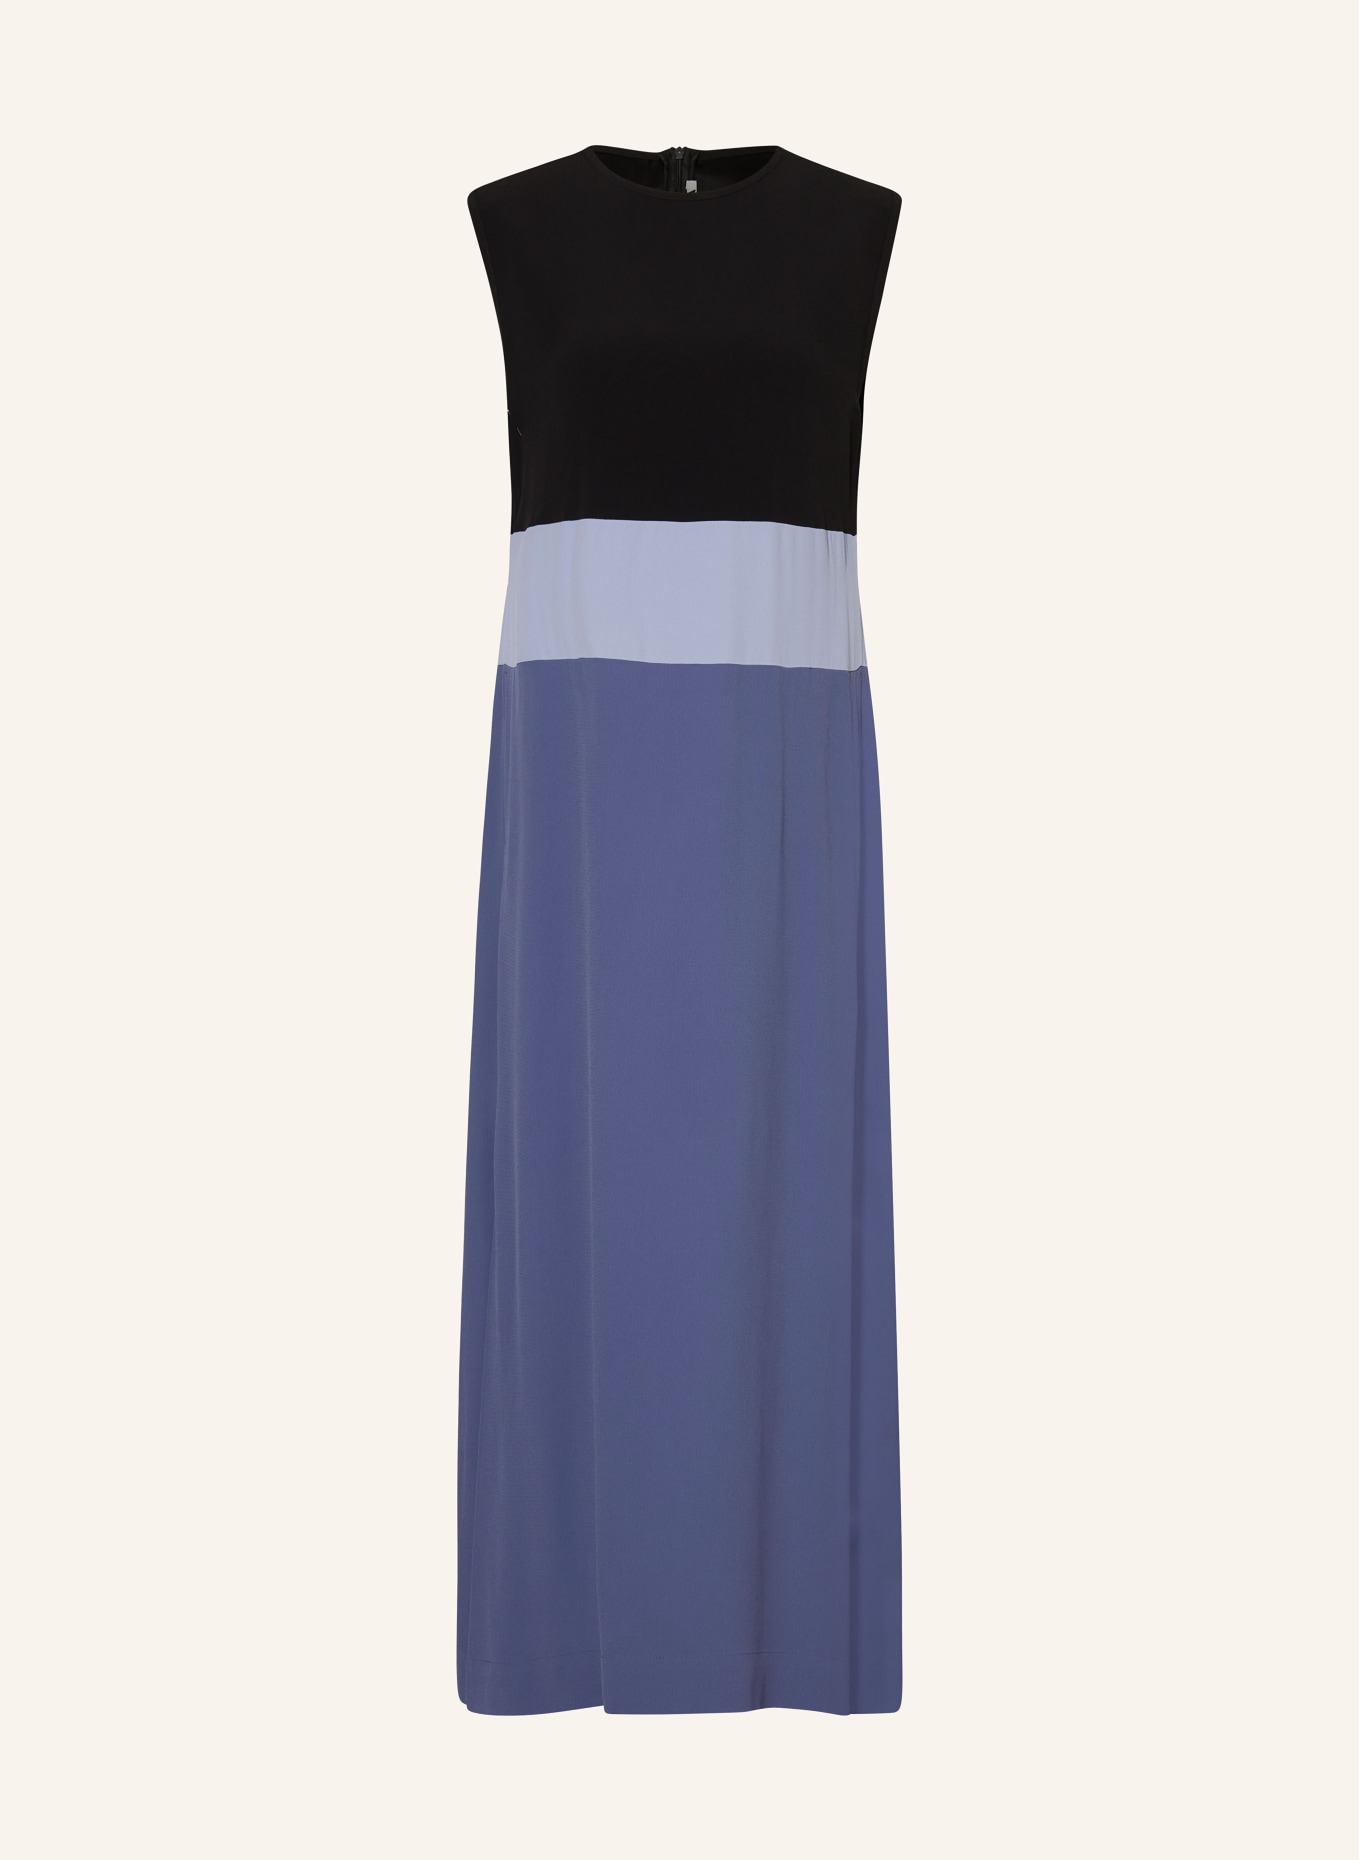 VANILIA Dress, Color: BLACK/ LIGHT BLUE/ BLUE (Image 1)